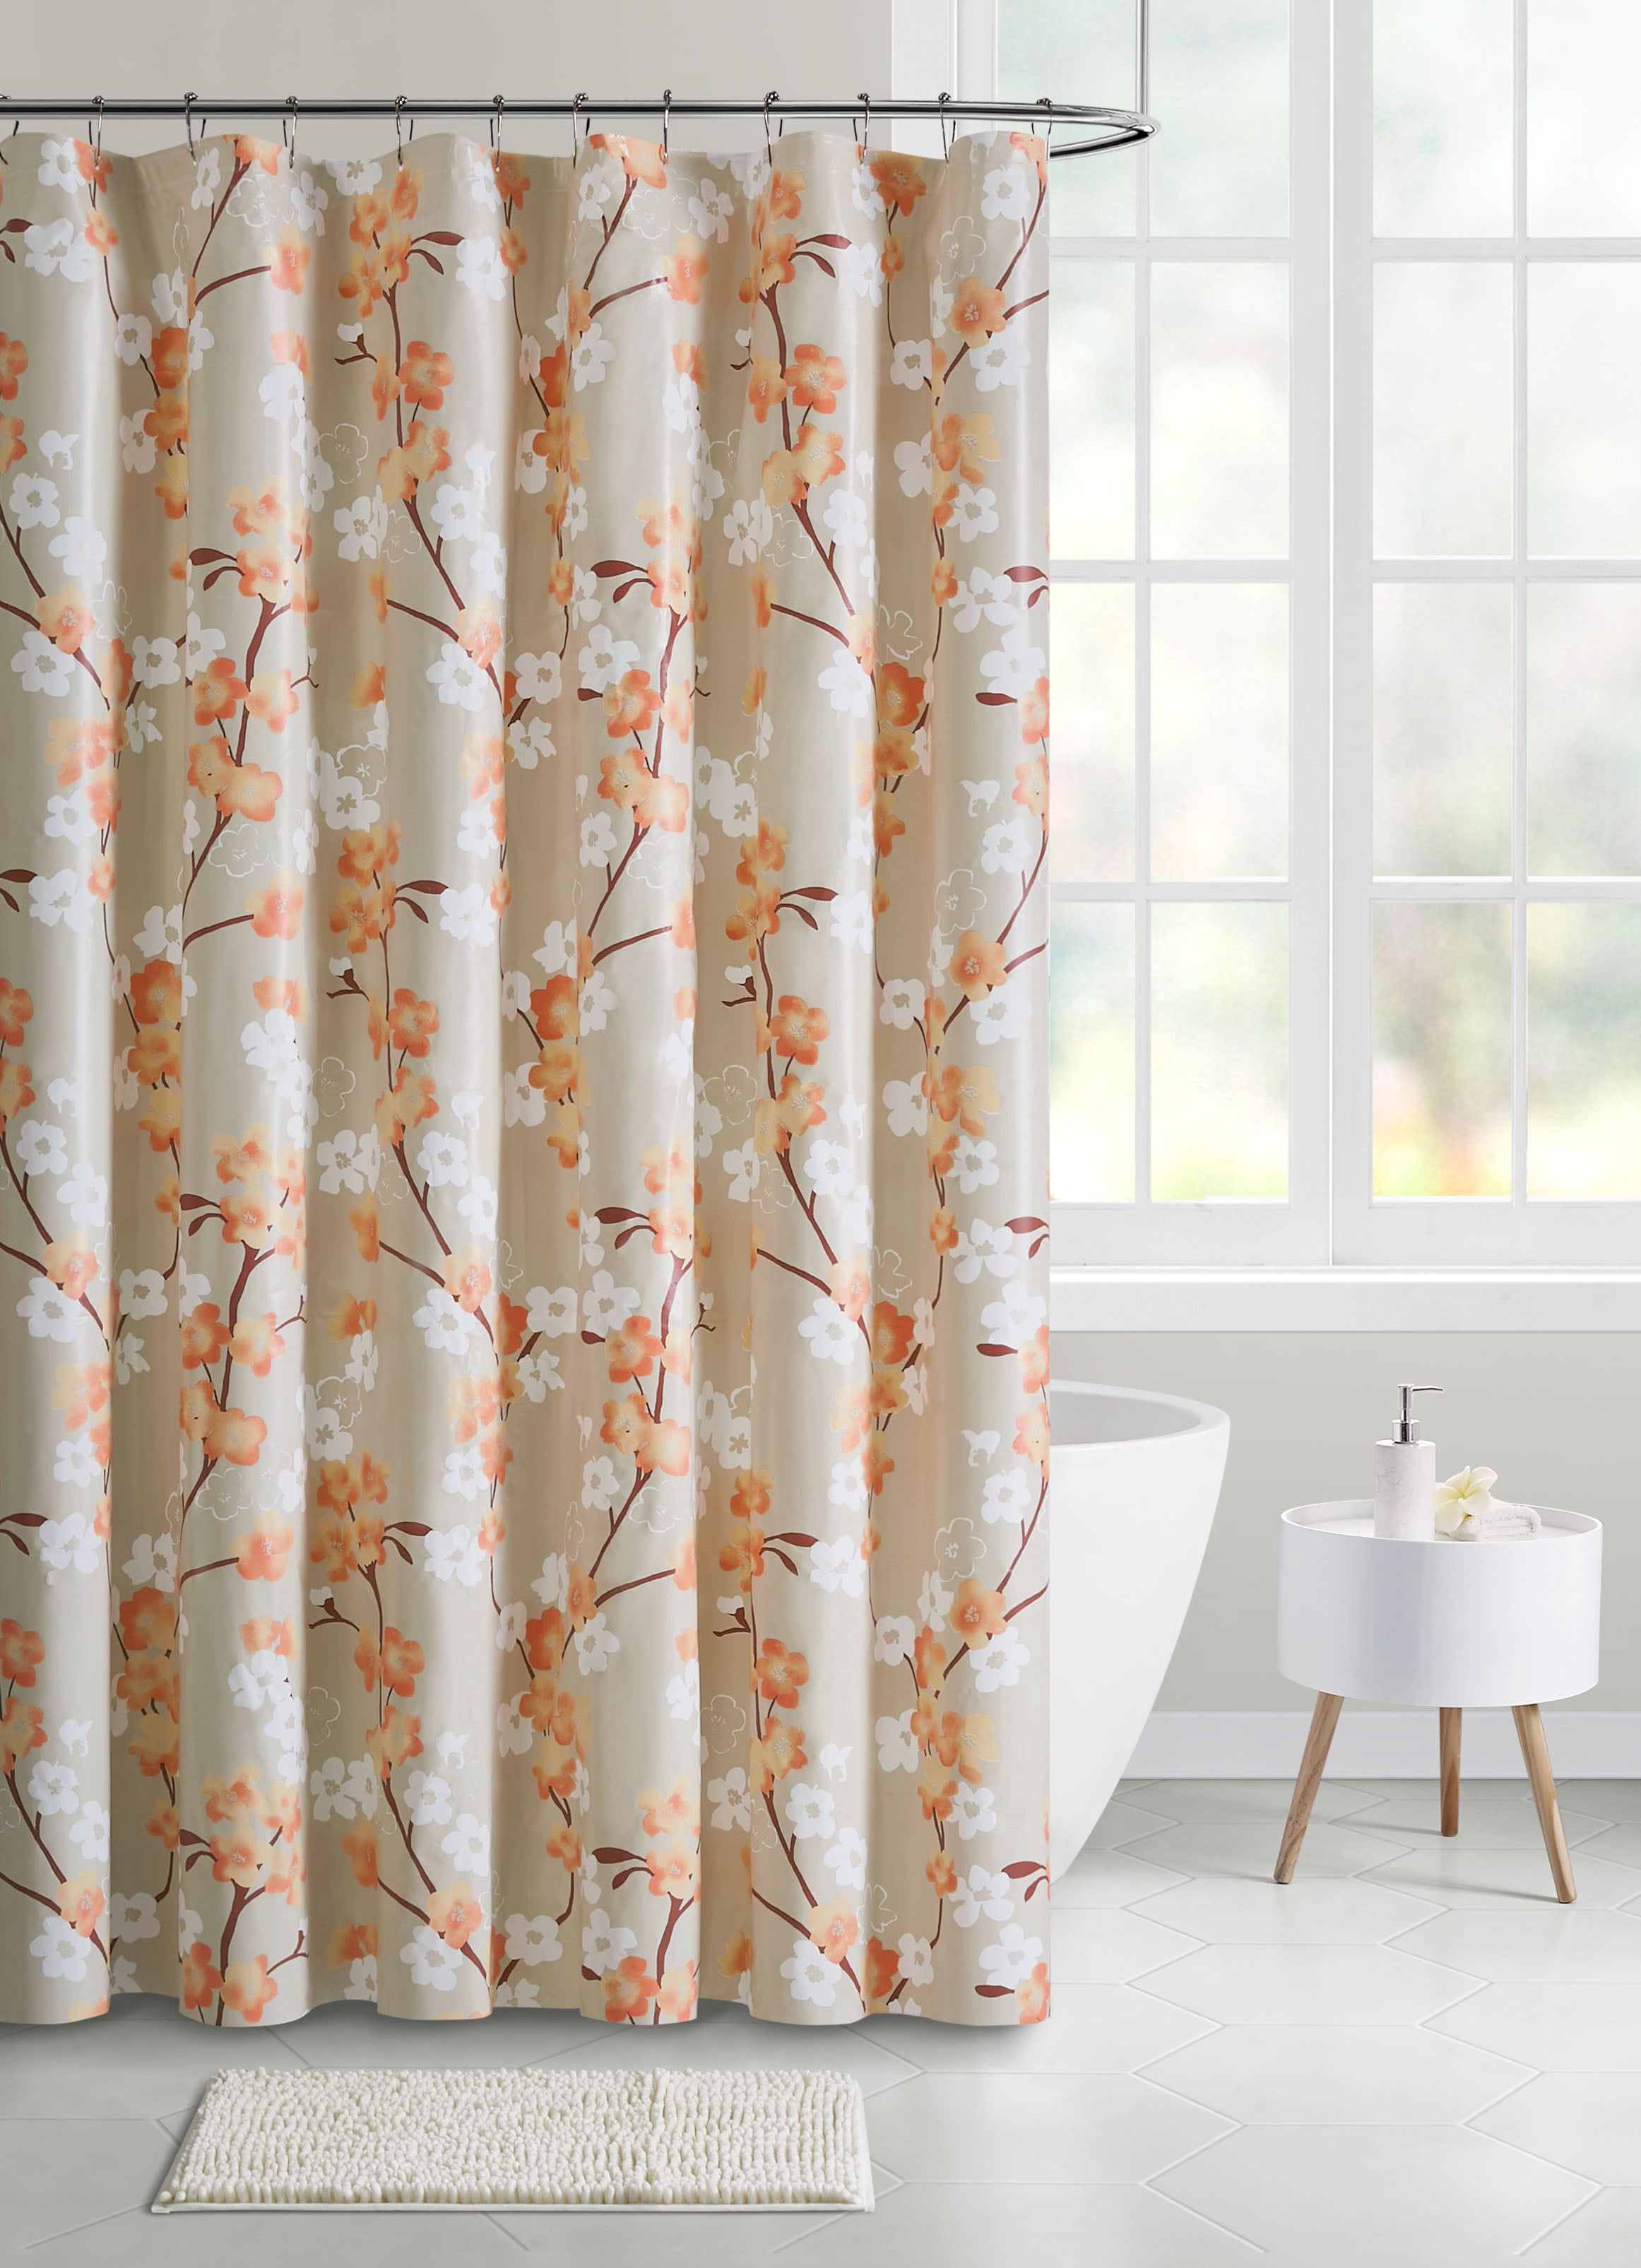 Aqua White Brown Floral Design PEVA Shower Curtain Liner Odorless ECO FRIENDLY 